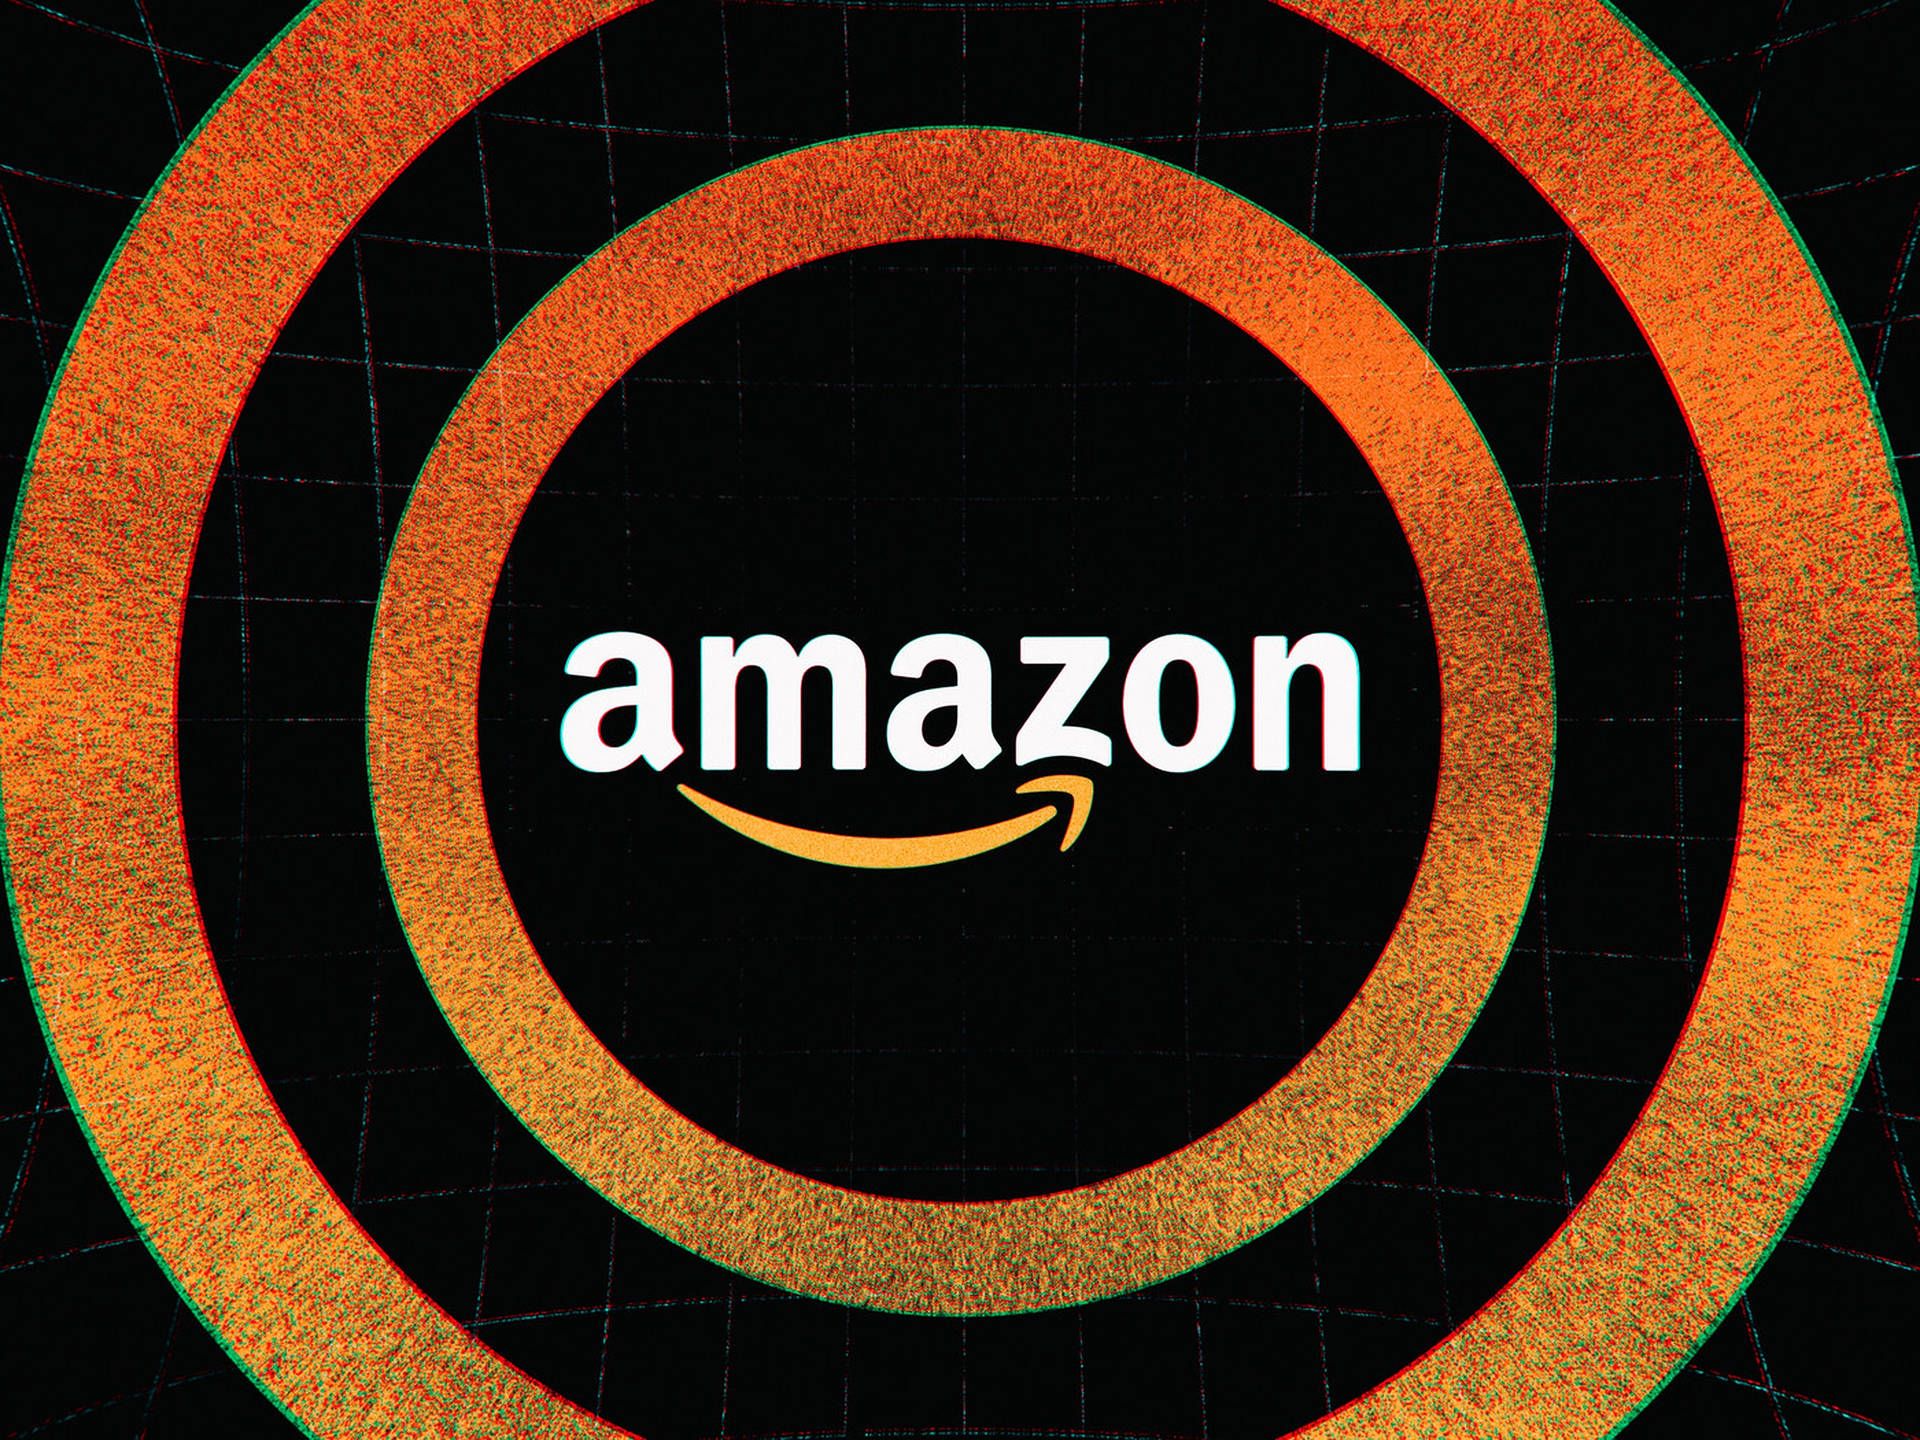  Amazon Hintergrundbild 1920x1440. Free Amazon Wallpaper Downloads, Amazon Wallpaper for FREE